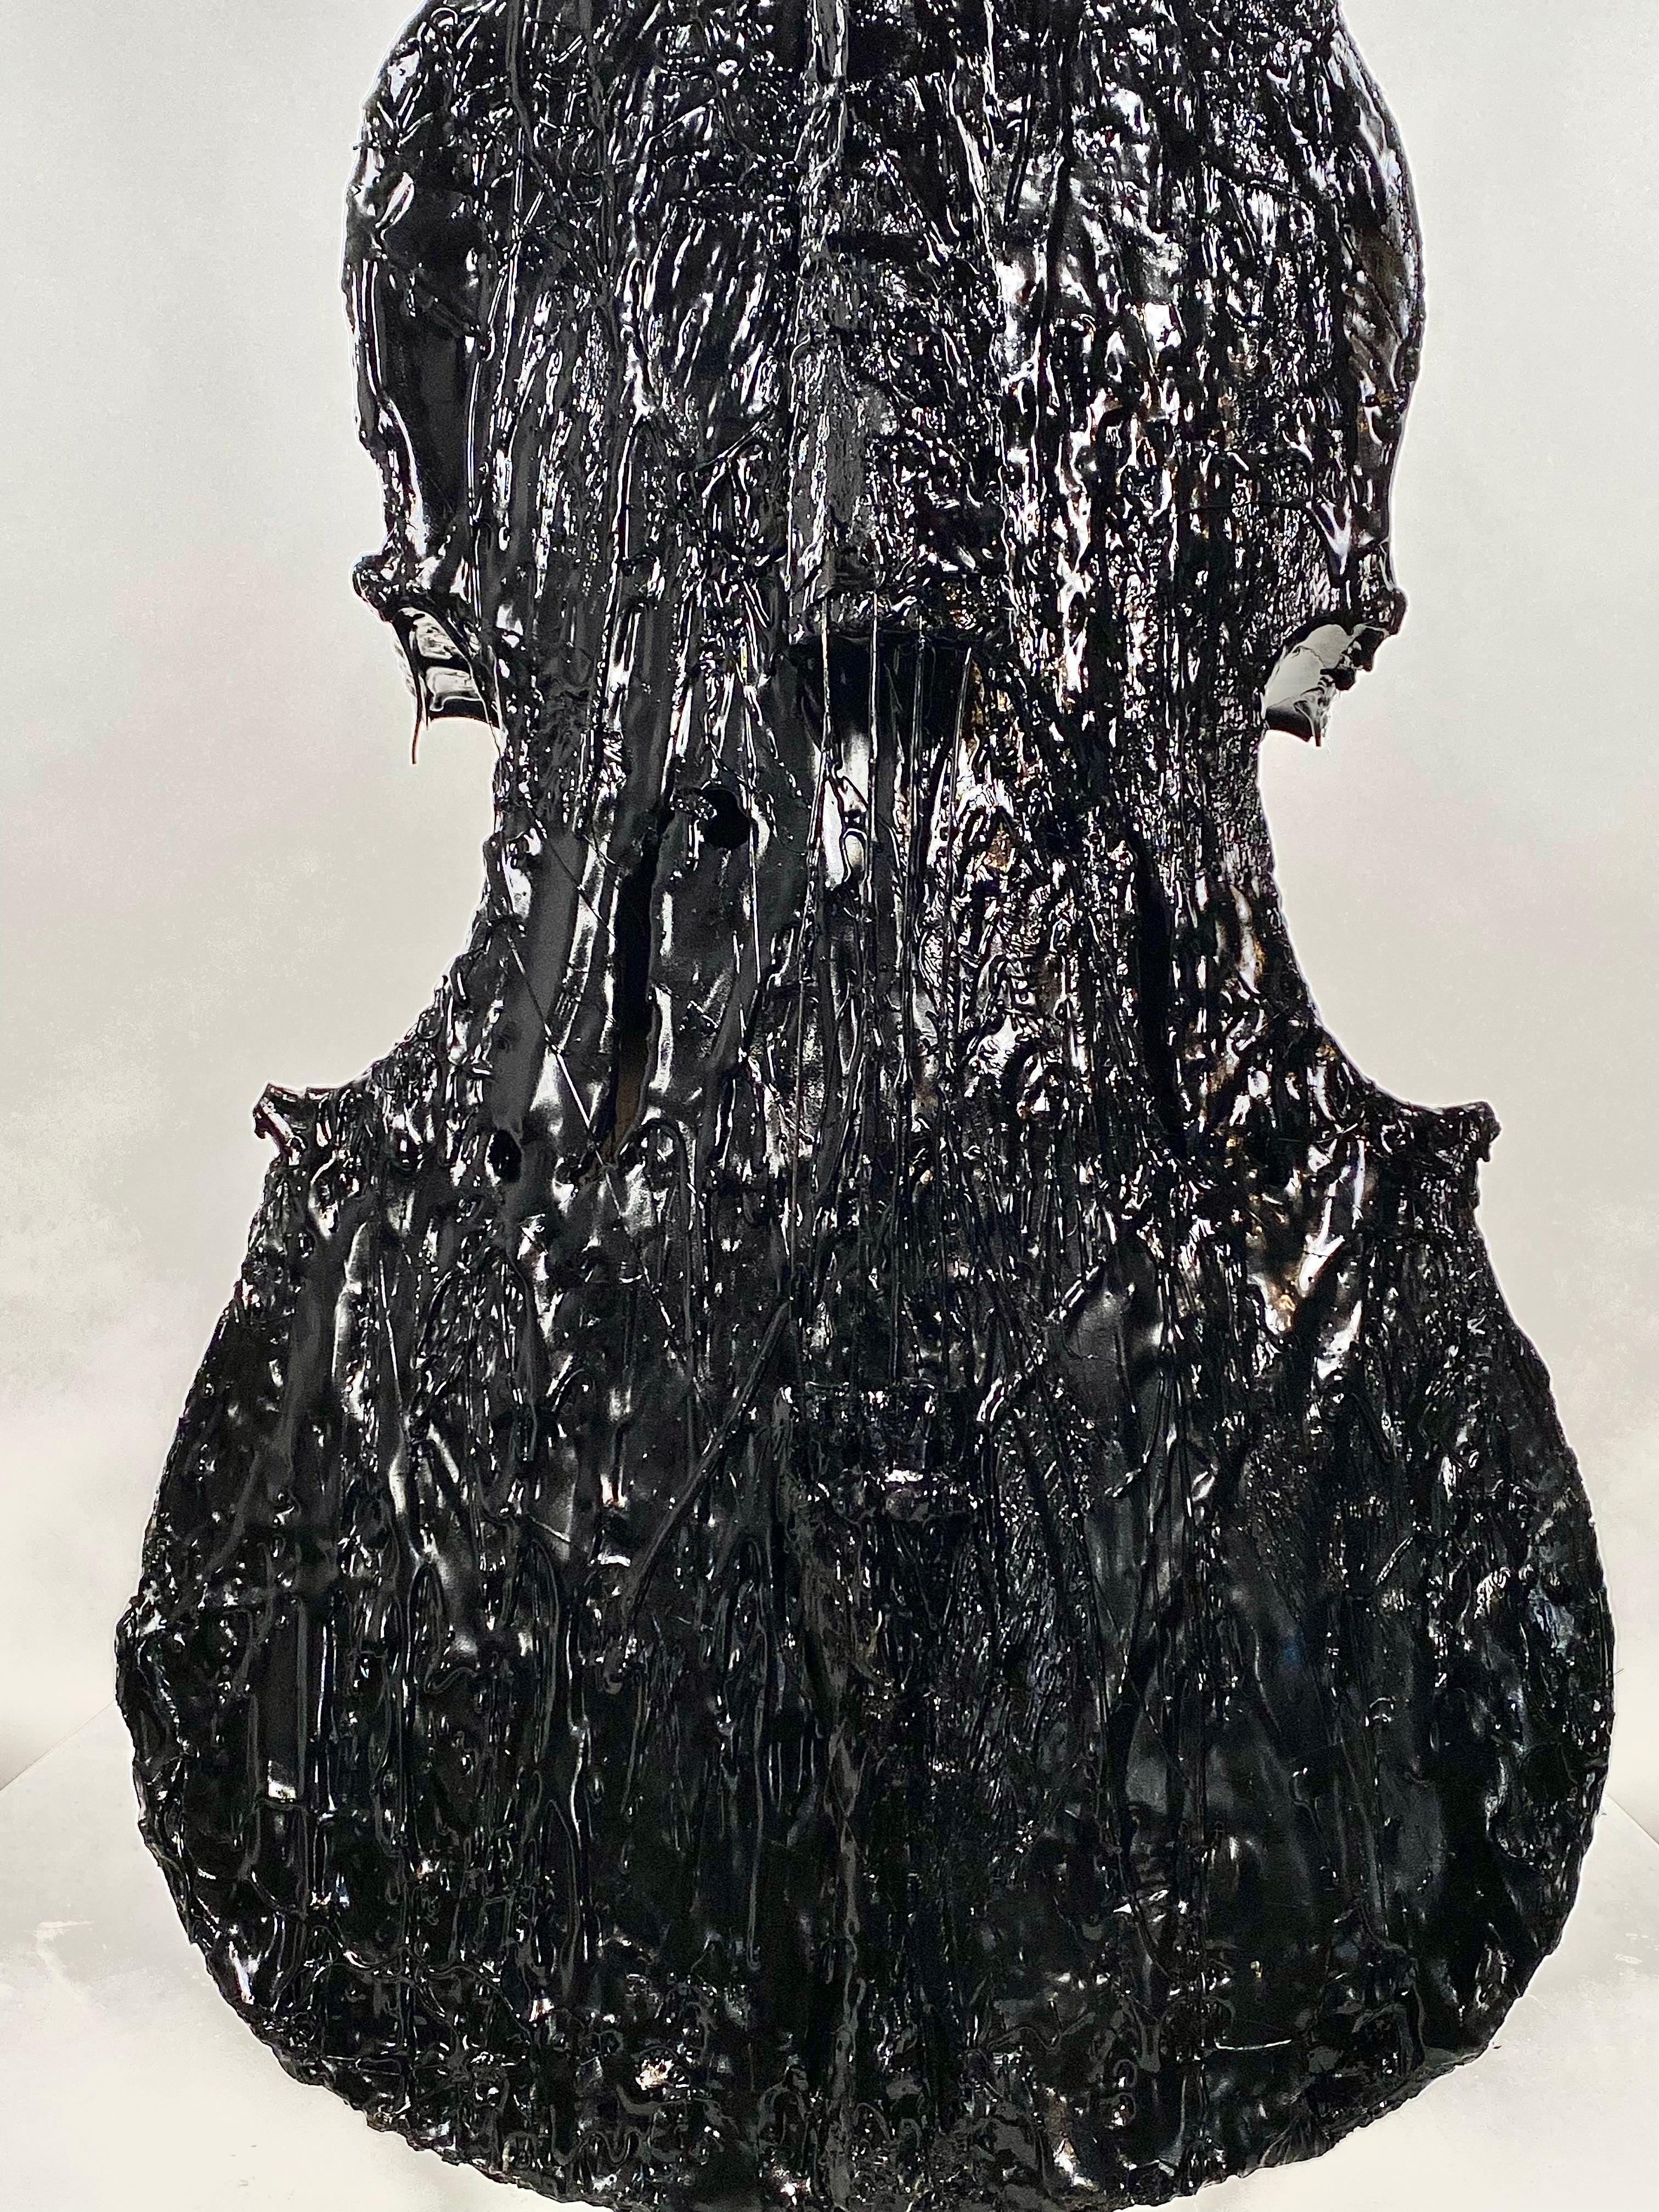 Contemporary Black Tar String Instrument Viola Sculpture, 21st Century by Mattia Biagi For Sale